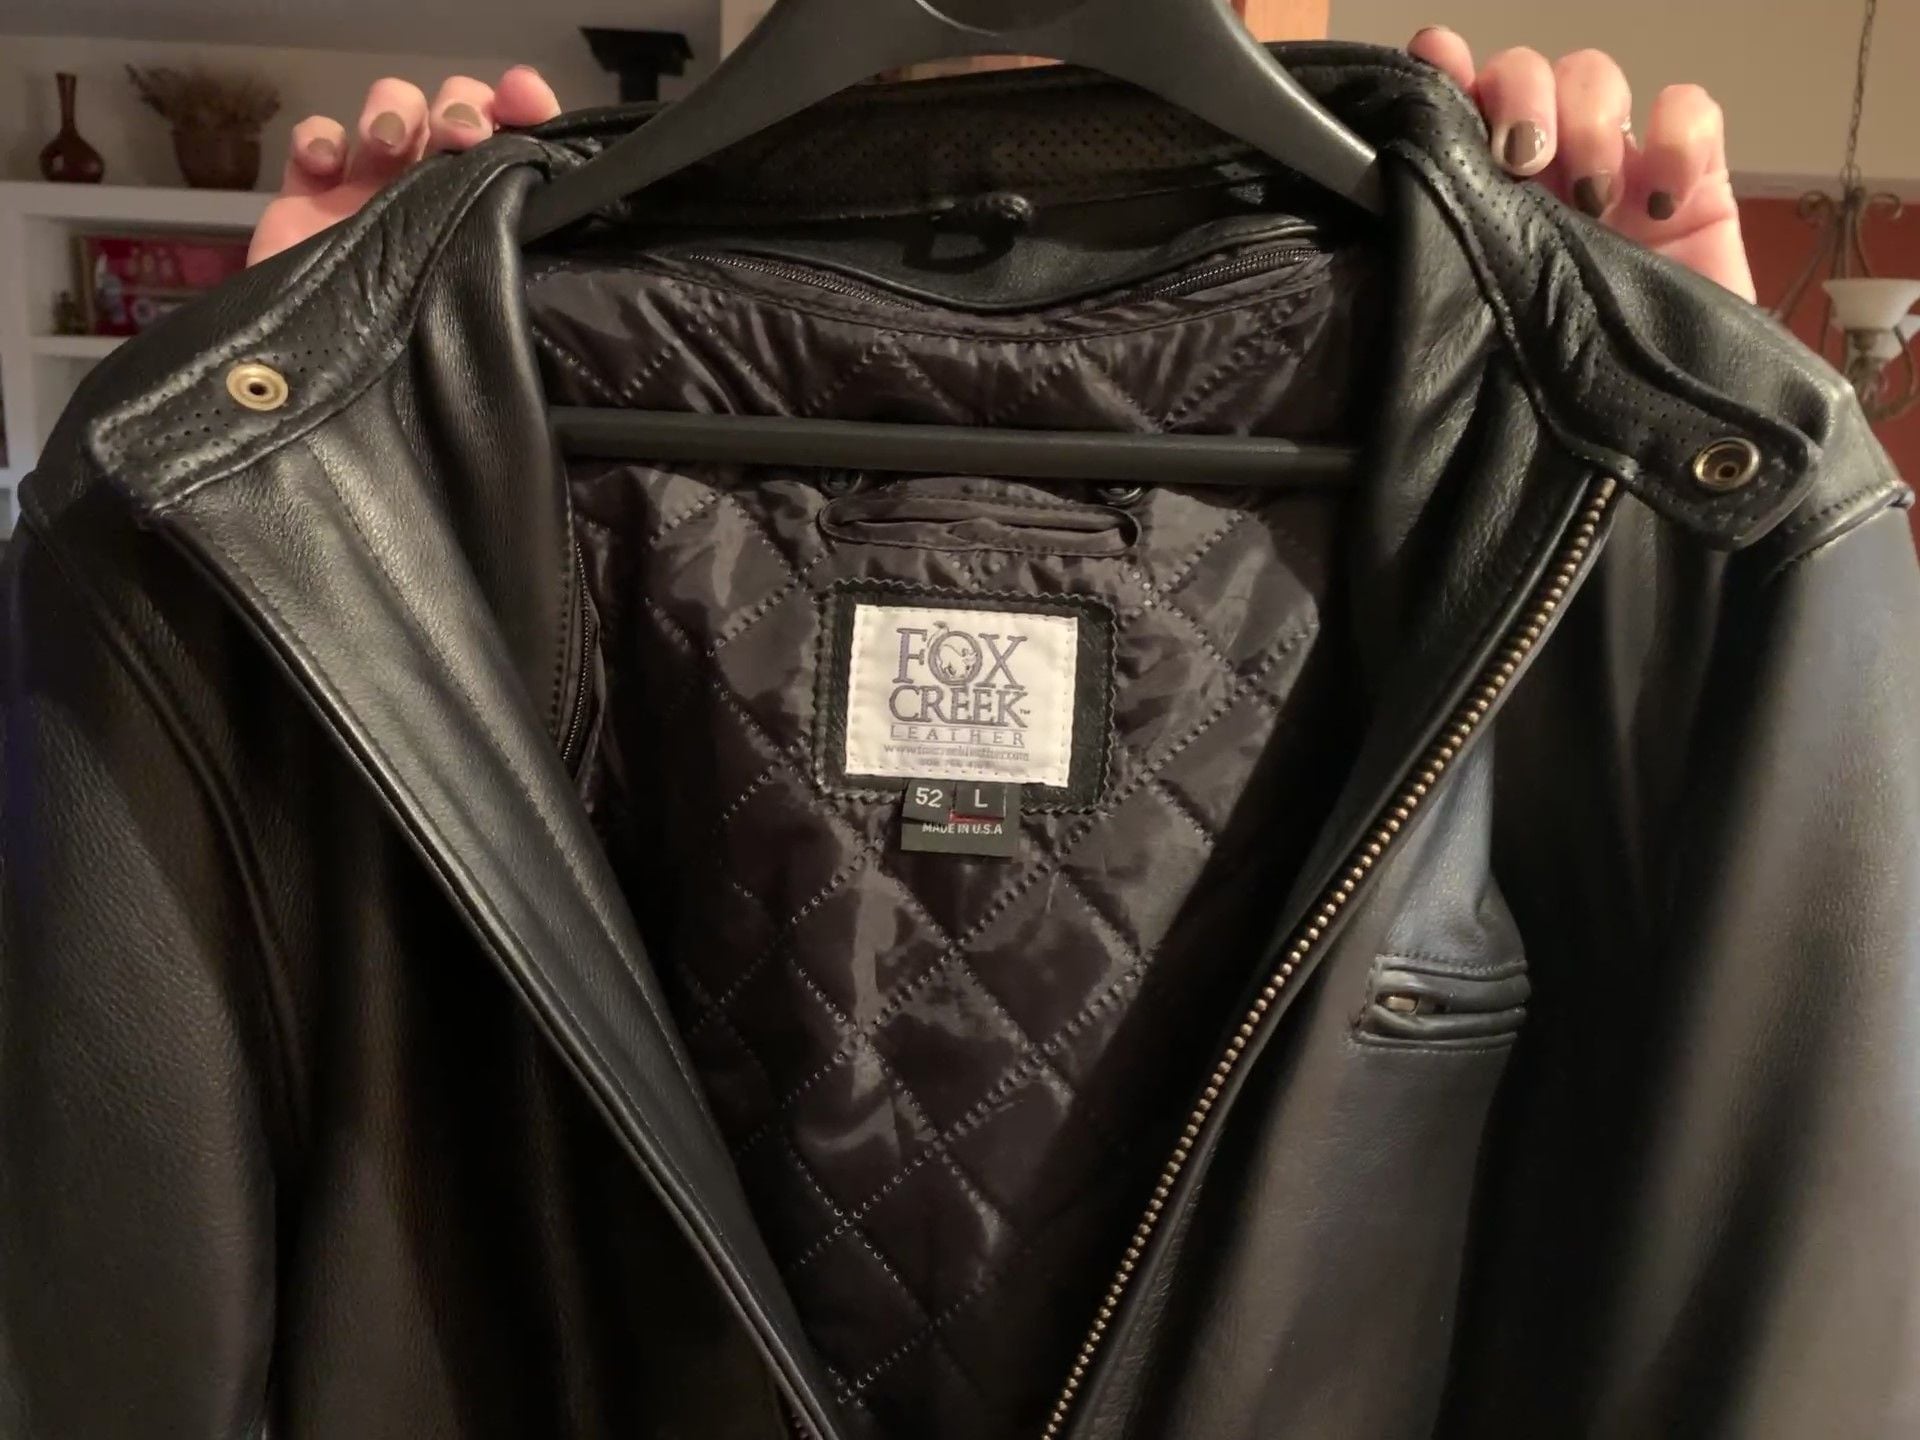 Fox Creek Grayson jacket 52L - Harley Davidson Forums